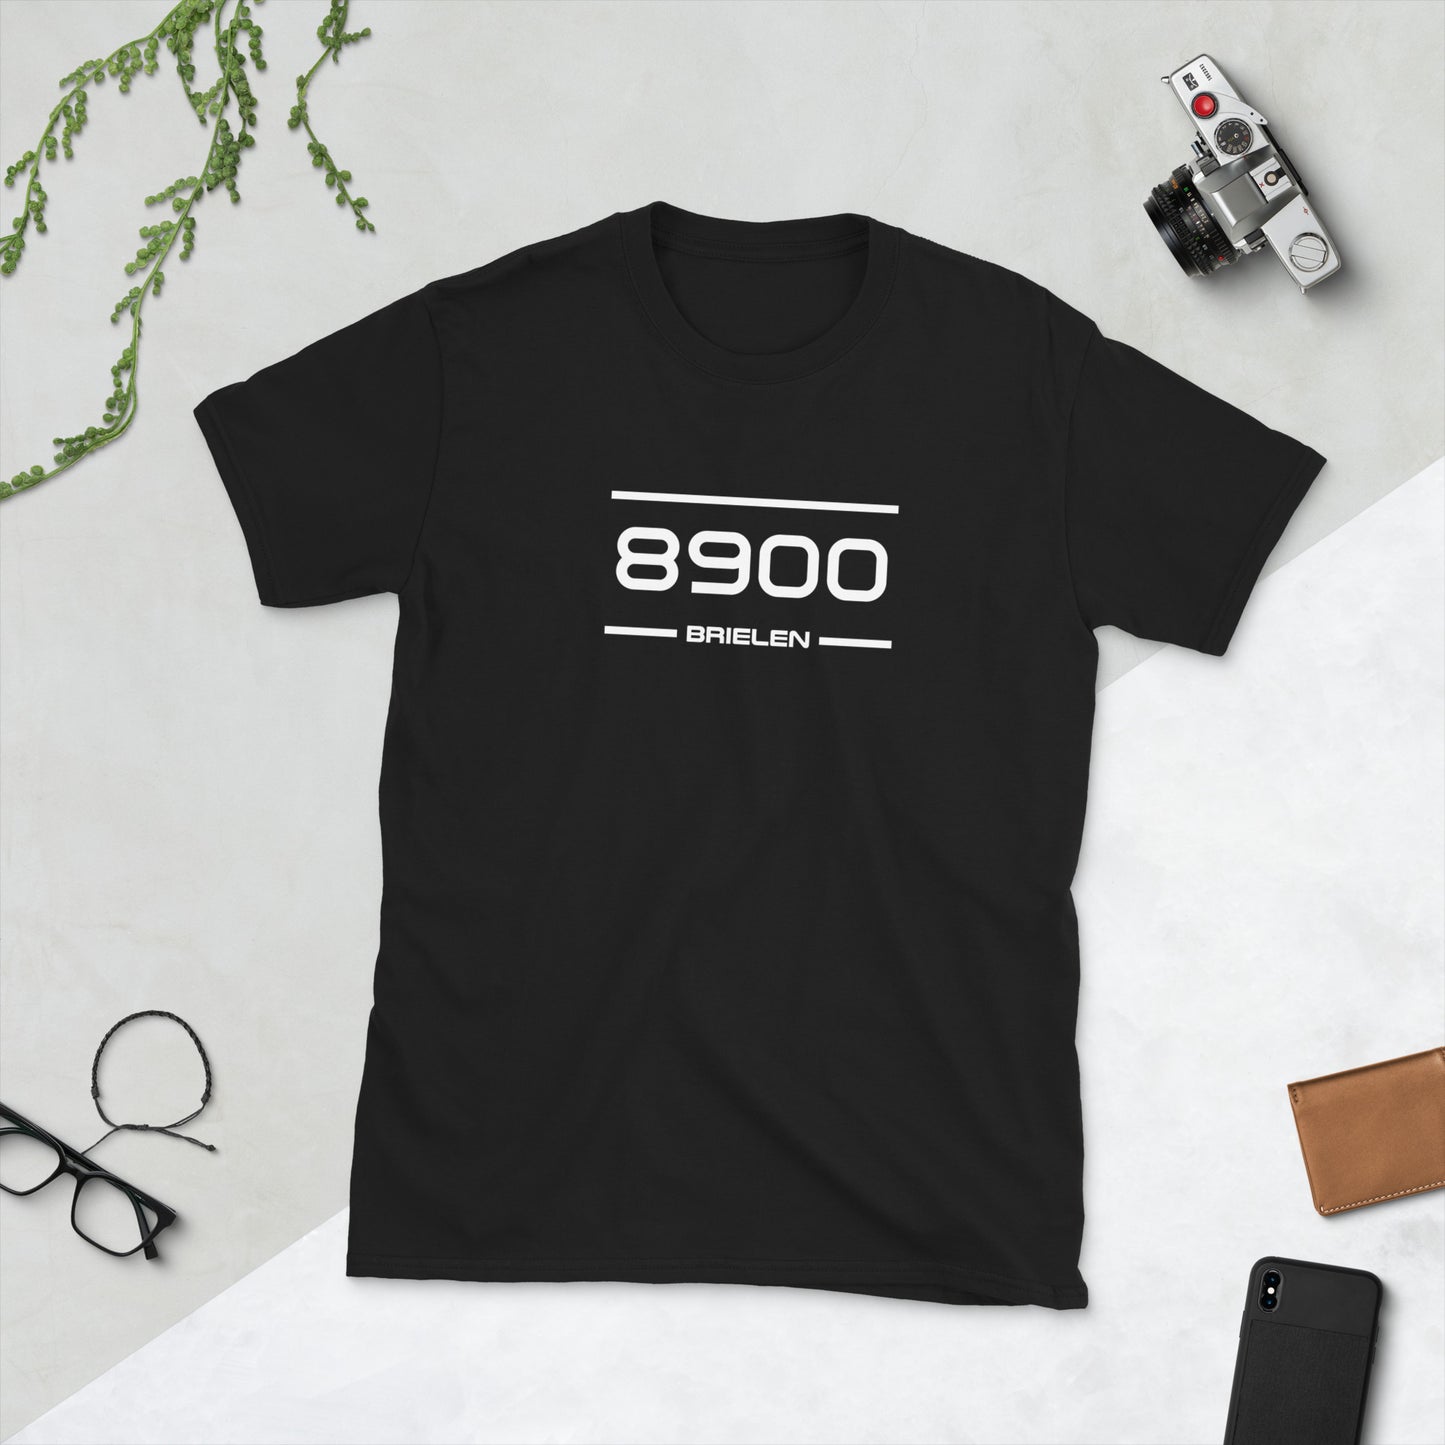 Tshirt - 8900 - Brielen